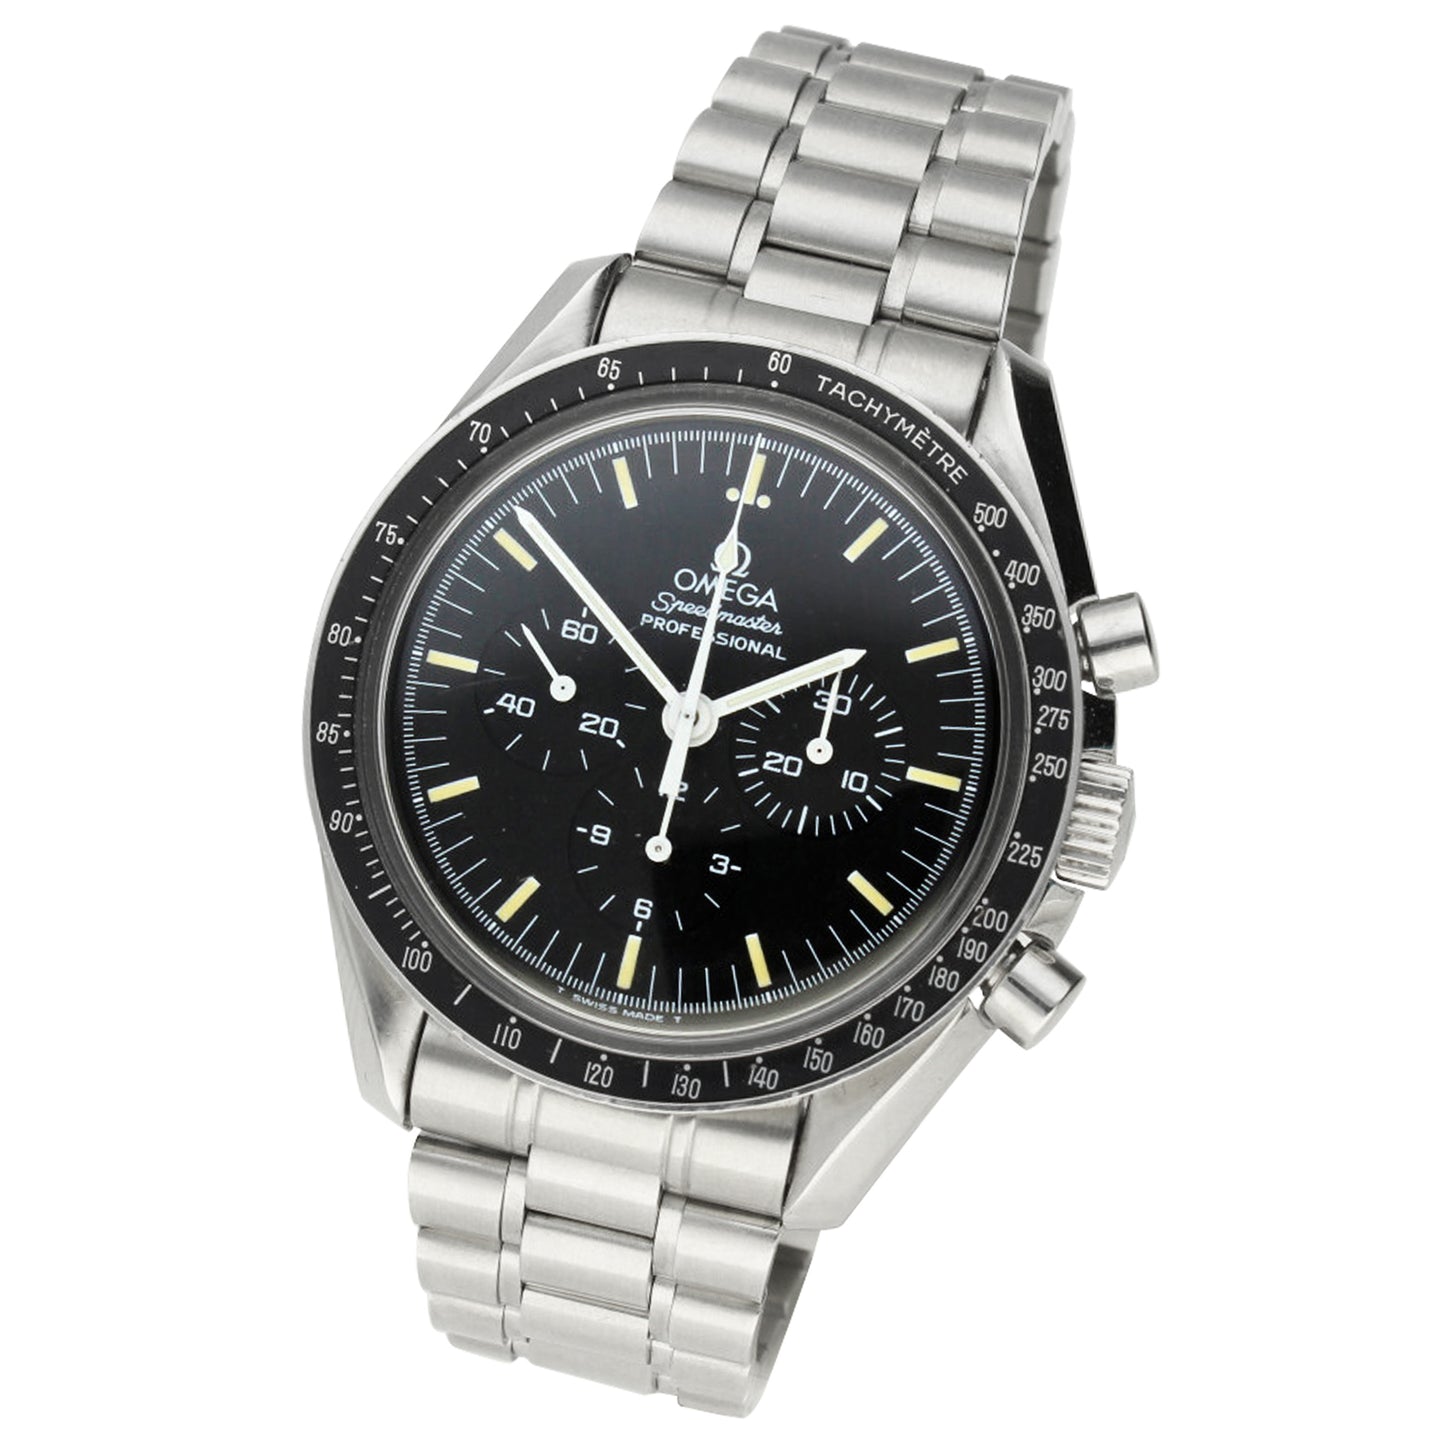 Stainless steel Speedmaster Professional 20th Anniversary 'Apollo XI' chronograph wristwatch. Made 1989